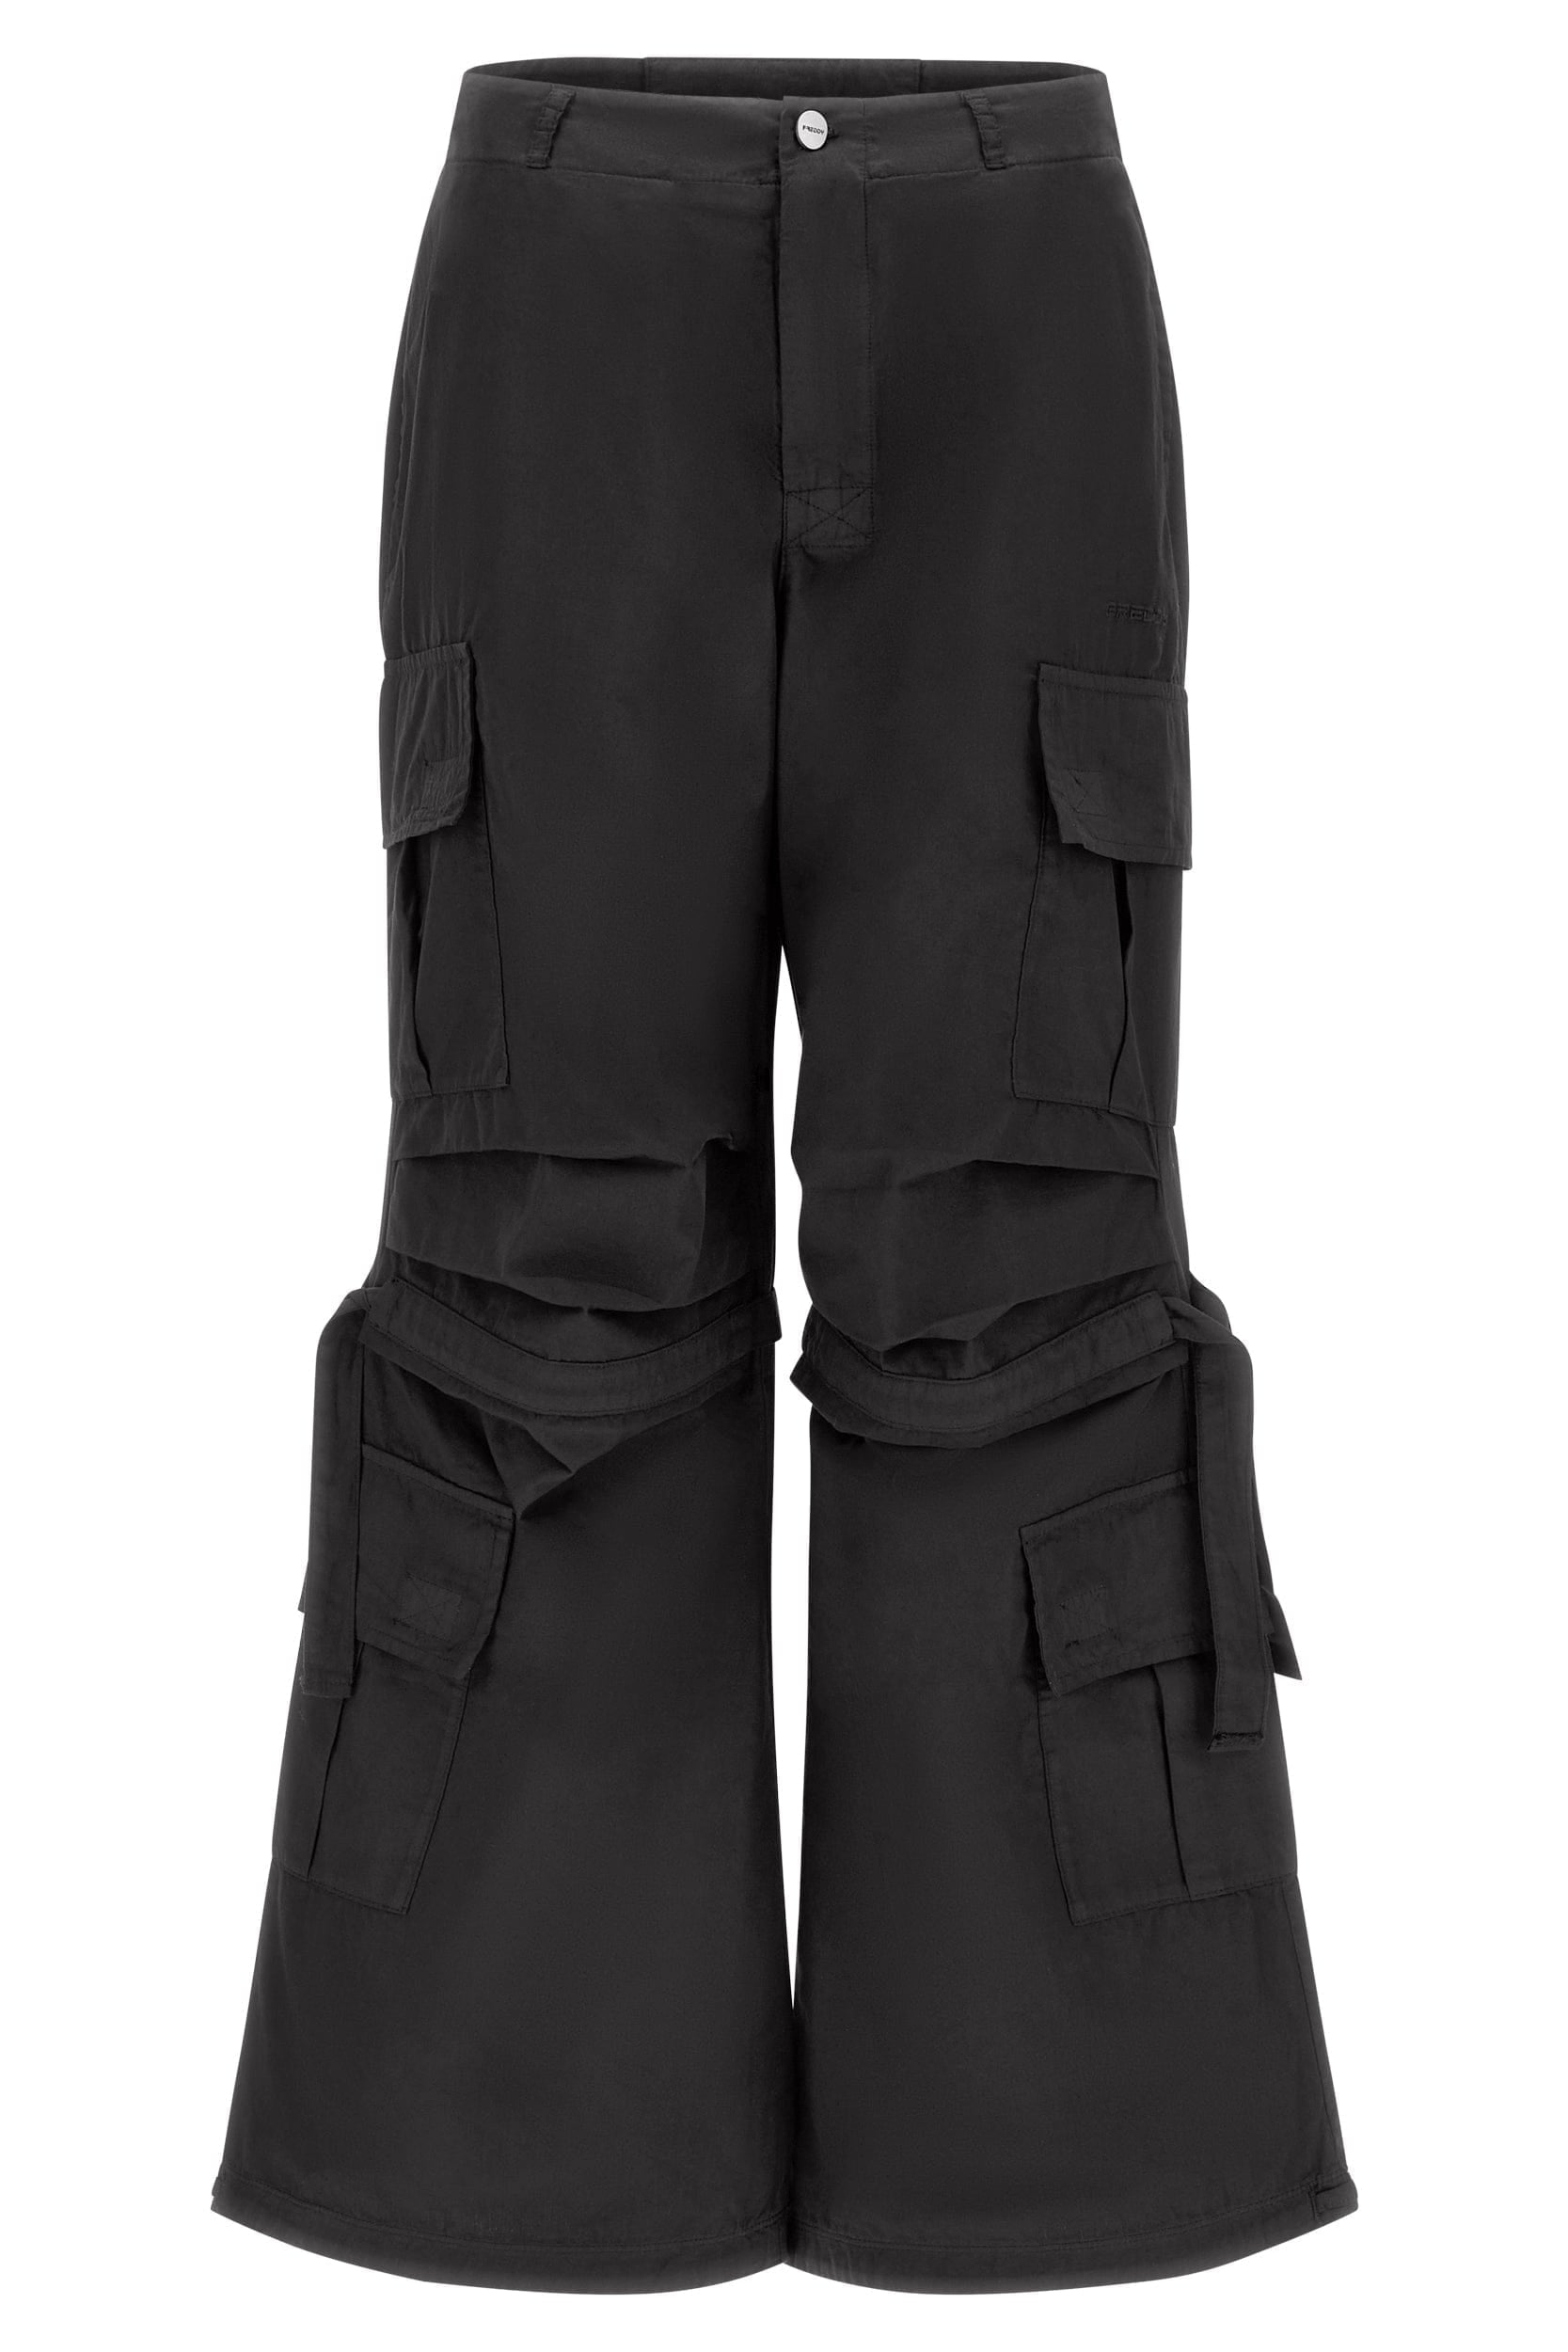 Cargo Pants - High Waisted - Full Length - Black 8